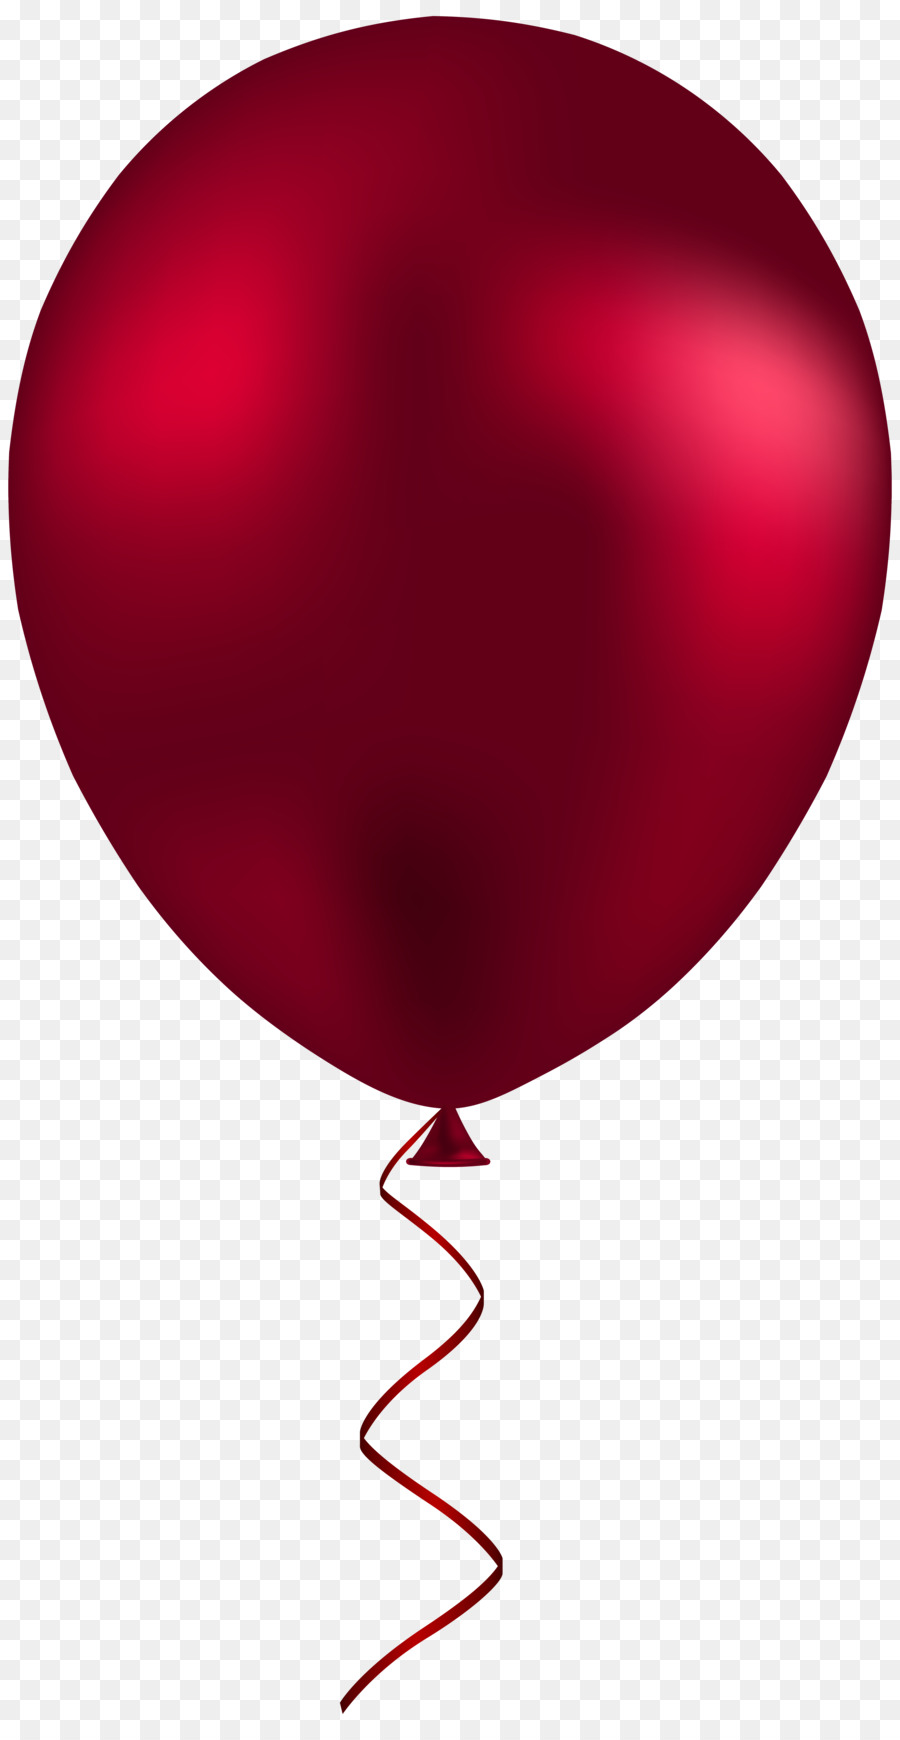 Balloon Clip art - balloon png download - 4162*8000 - Free Transparent Balloon png Download.